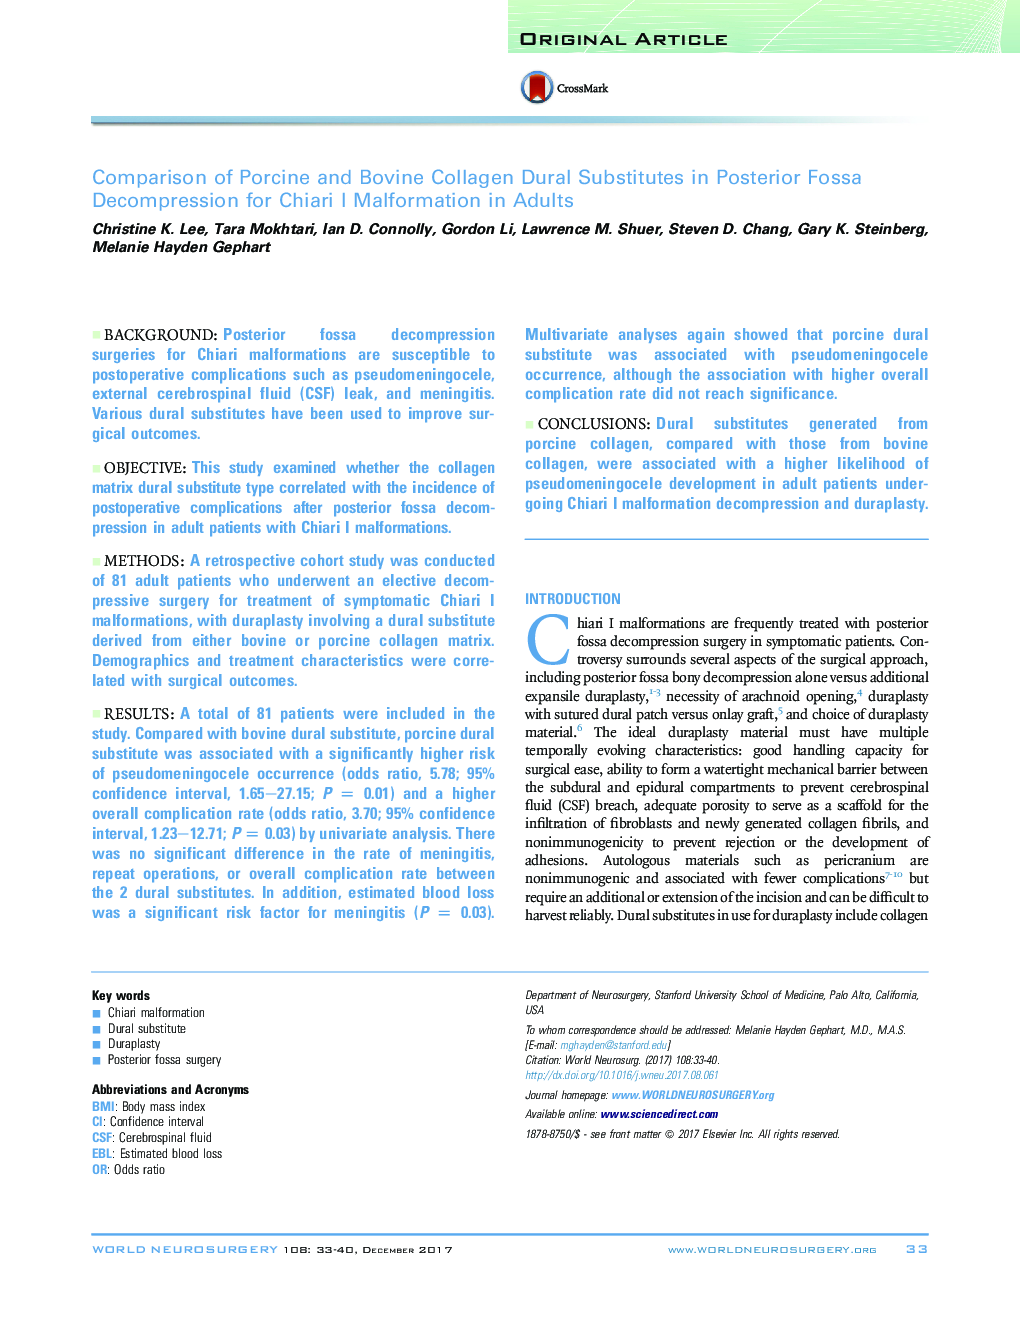 Original ArticleComparison of Porcine and Bovine Collagen Dural Substitutes in Posterior Fossa Decompression for Chiari I Malformation in Adults